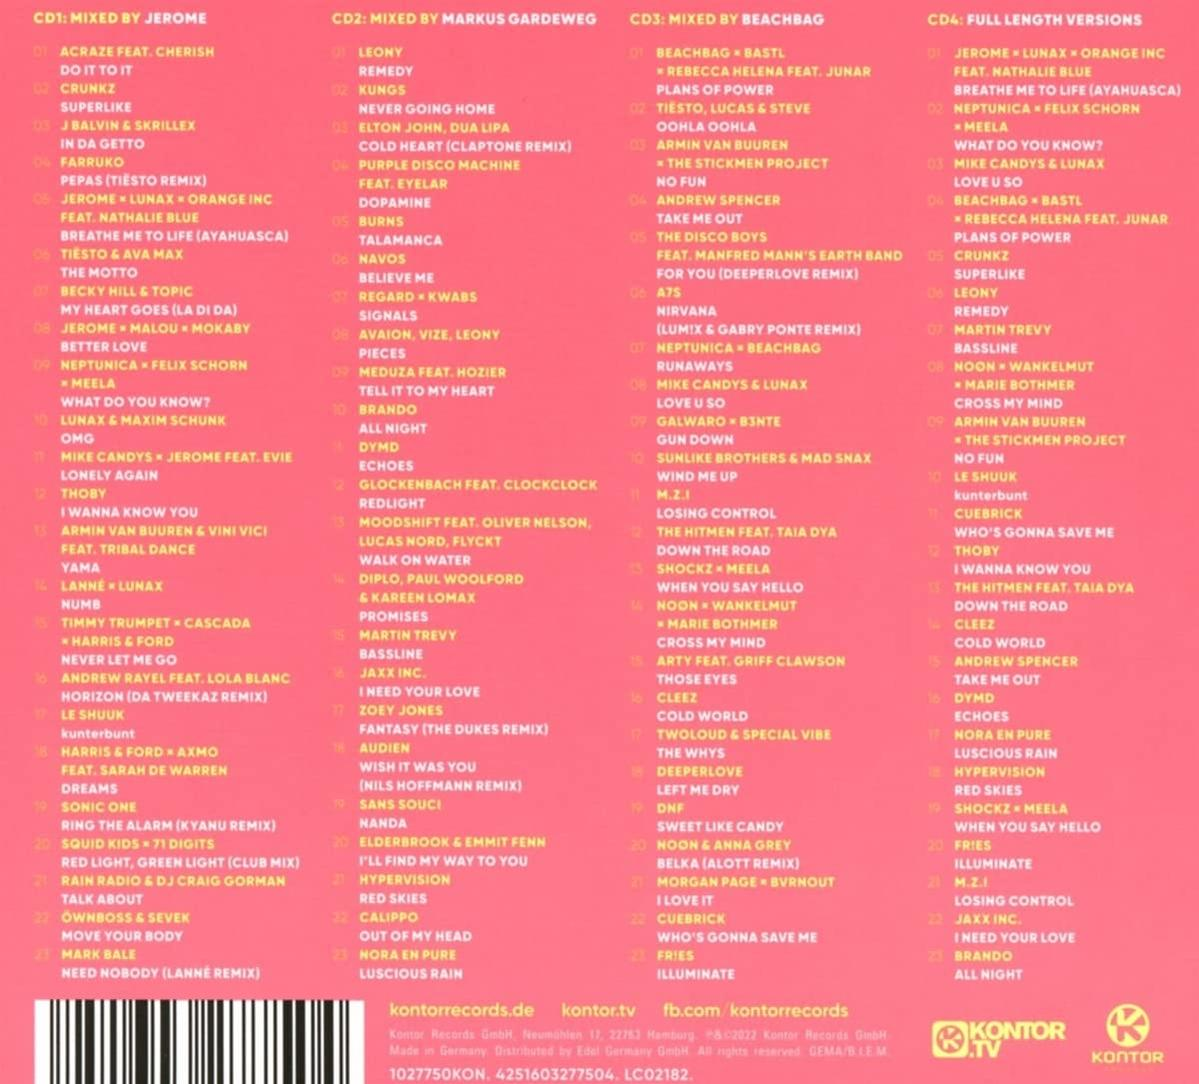 Of - VARIOUS Kontor The - Vol.92 (CD) Top Clubs